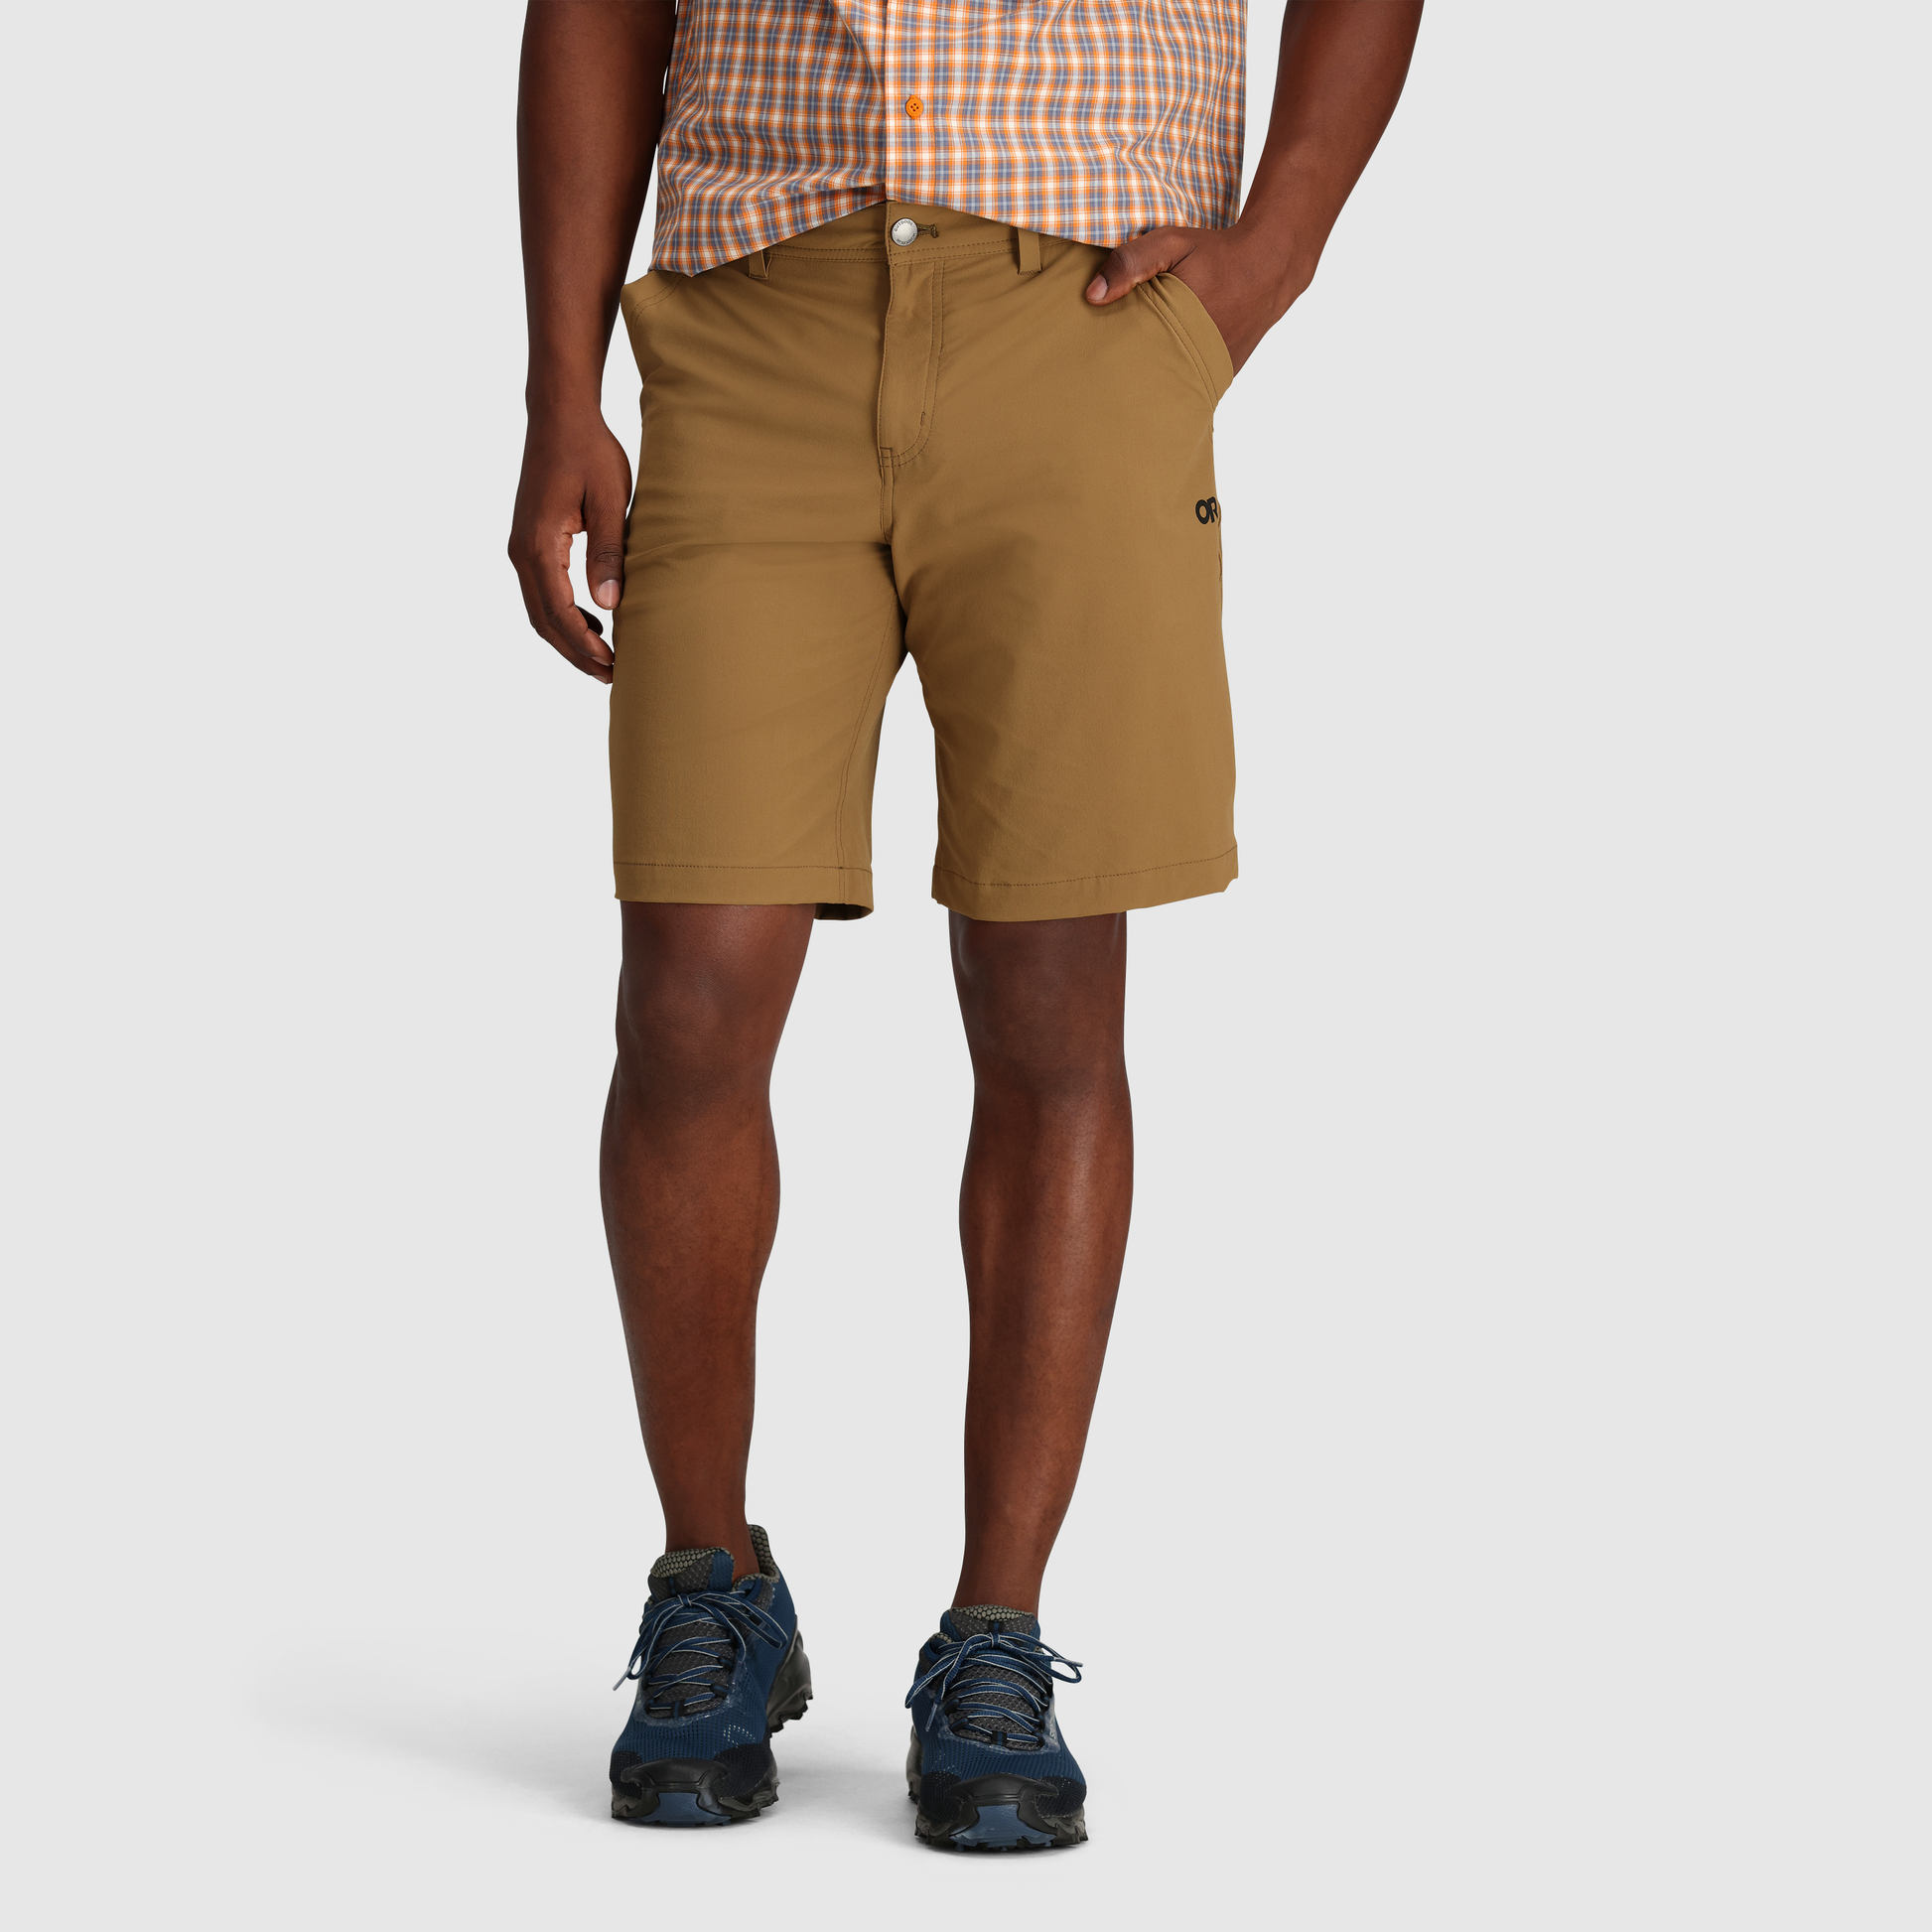 Outdoor Research Men's Ferrosi Shorts - 10 Inseam